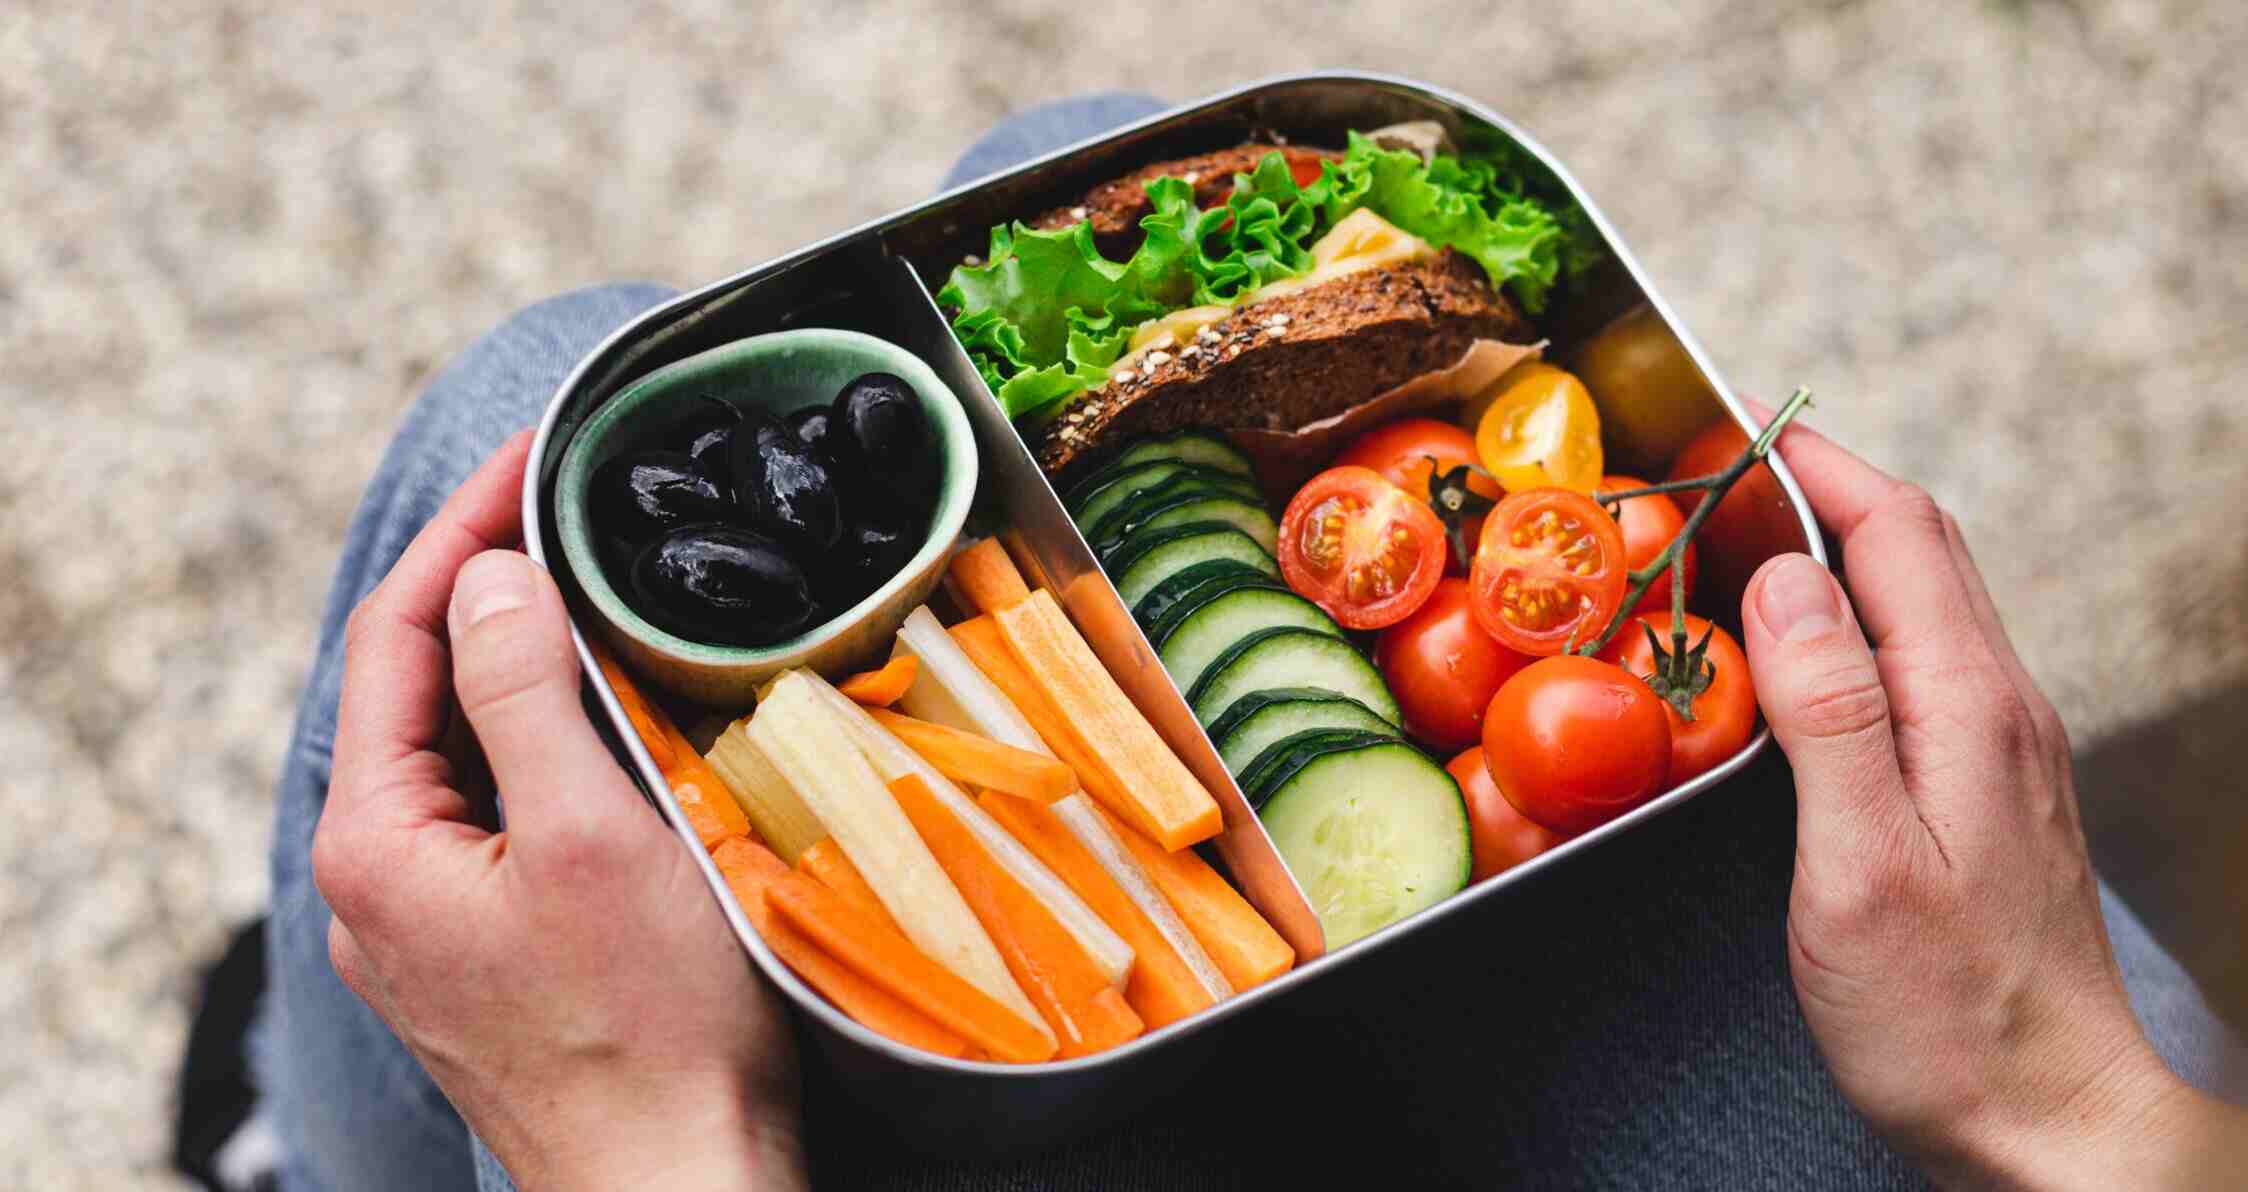 Lunchbox Sandwich Ideas - Tips, Tricks and Ideas - Big Bear's Wife